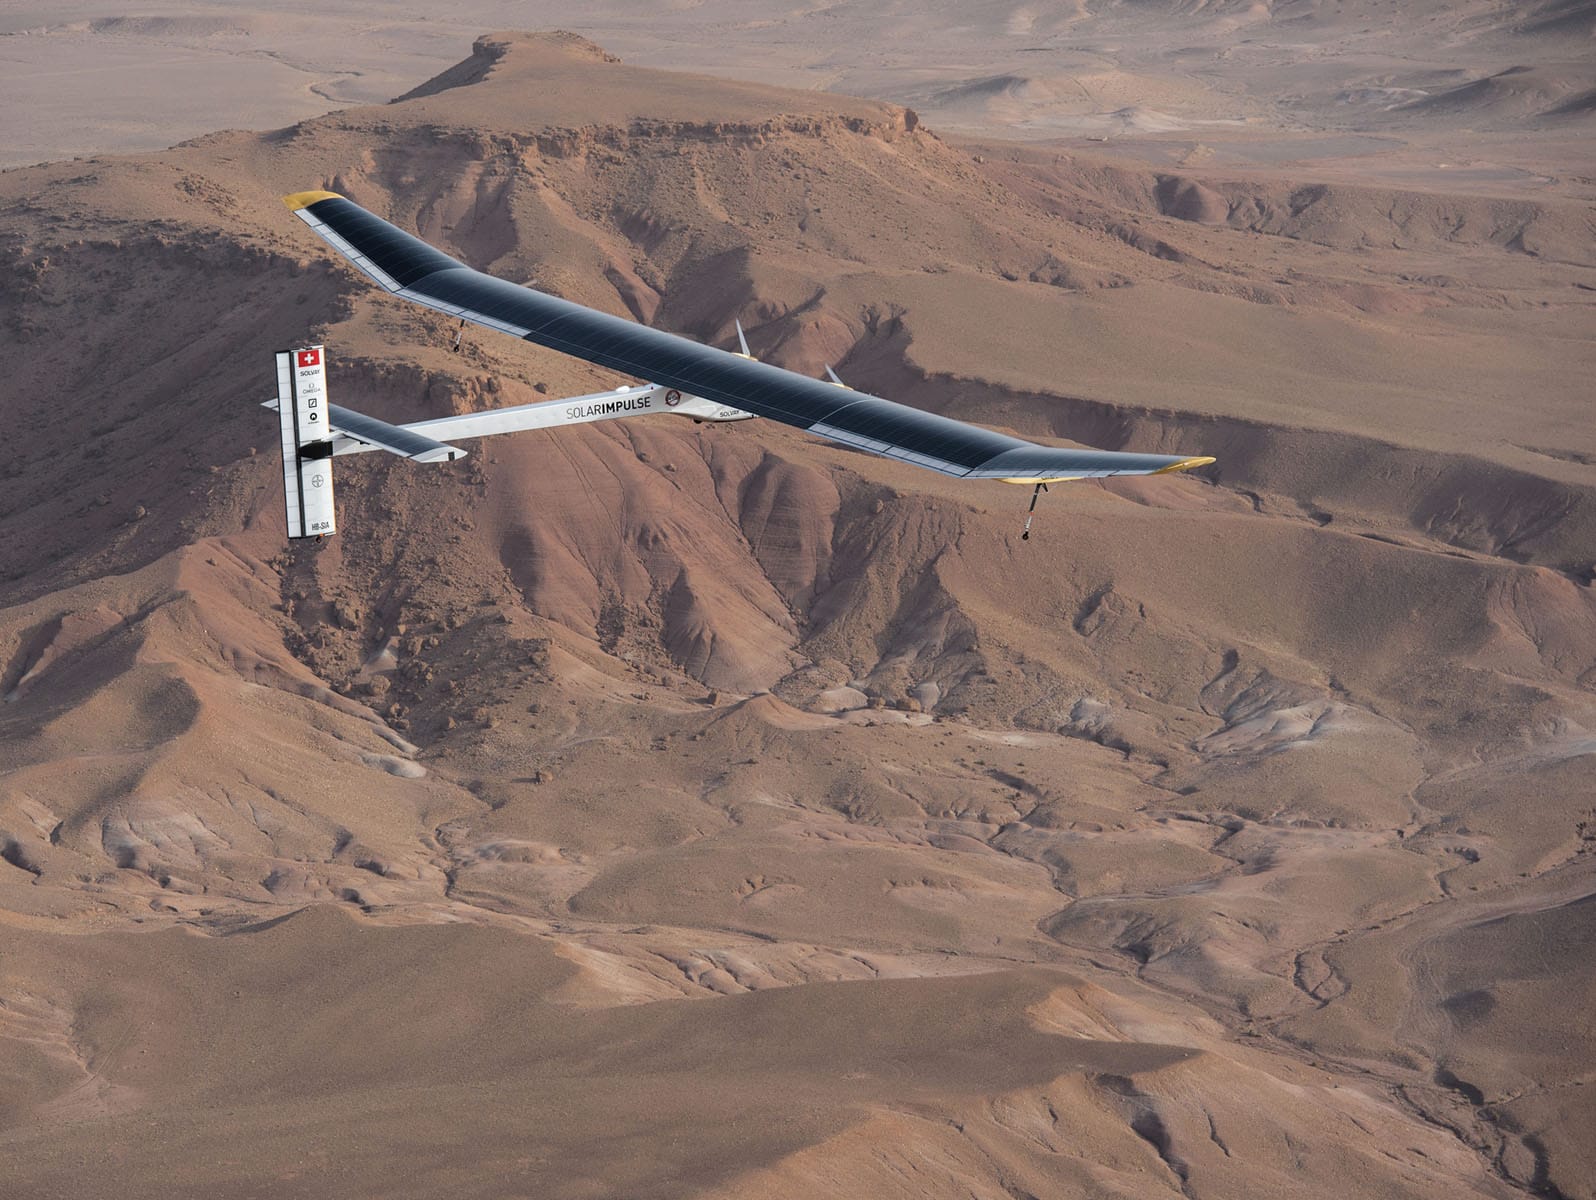 The Solar impulse aircraft, in the Moroccan desert sky